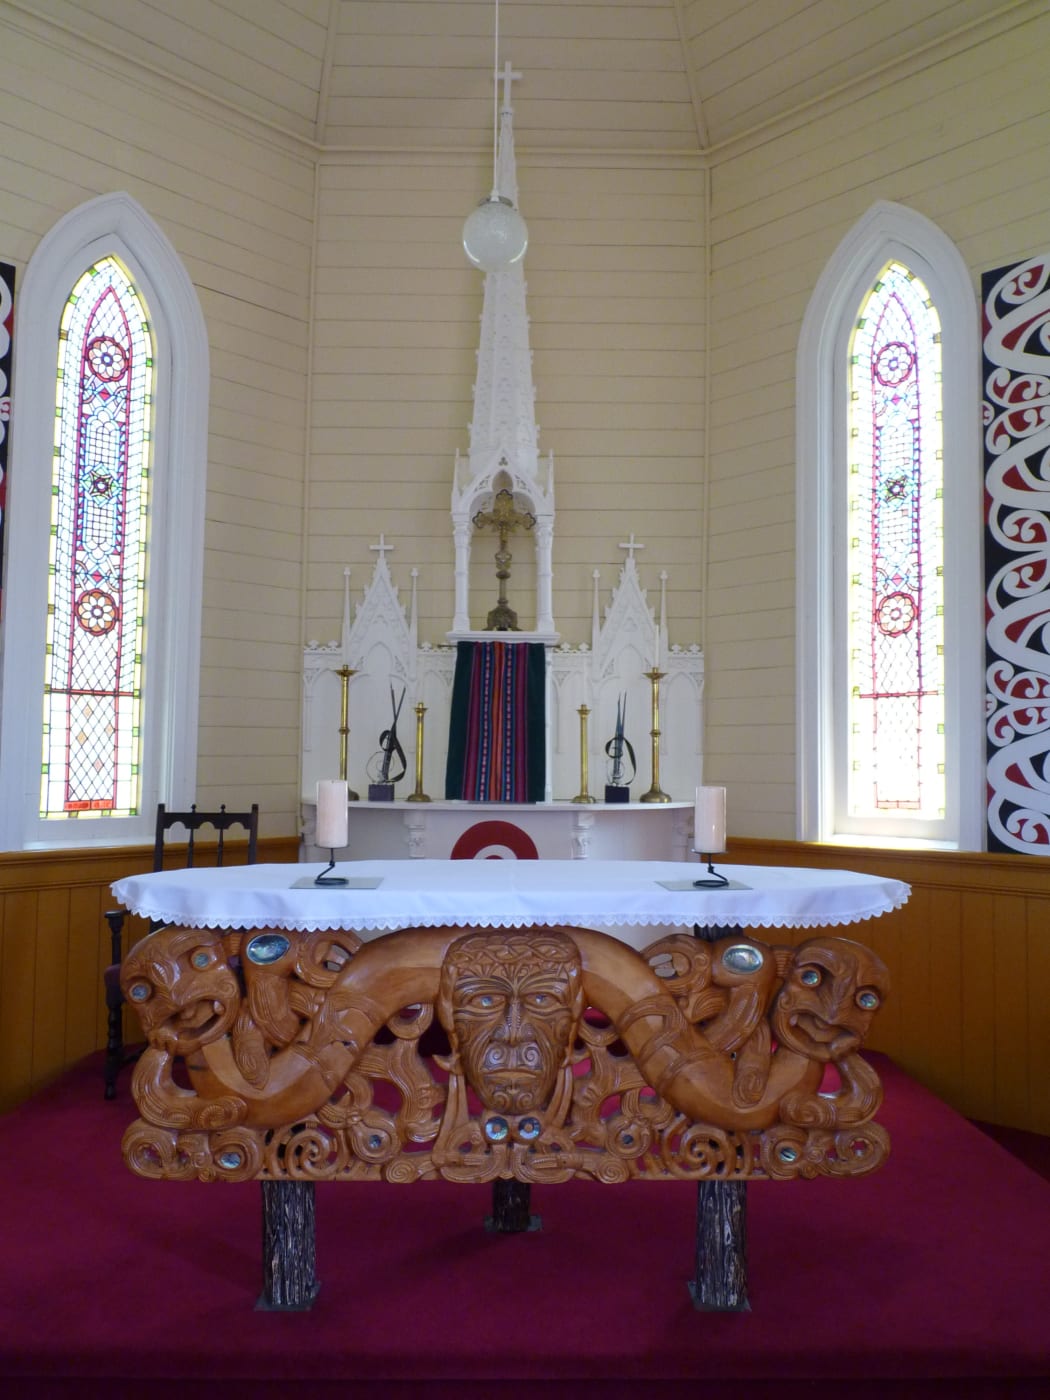 St Joseph's Church in Jerusalem, New Zealand